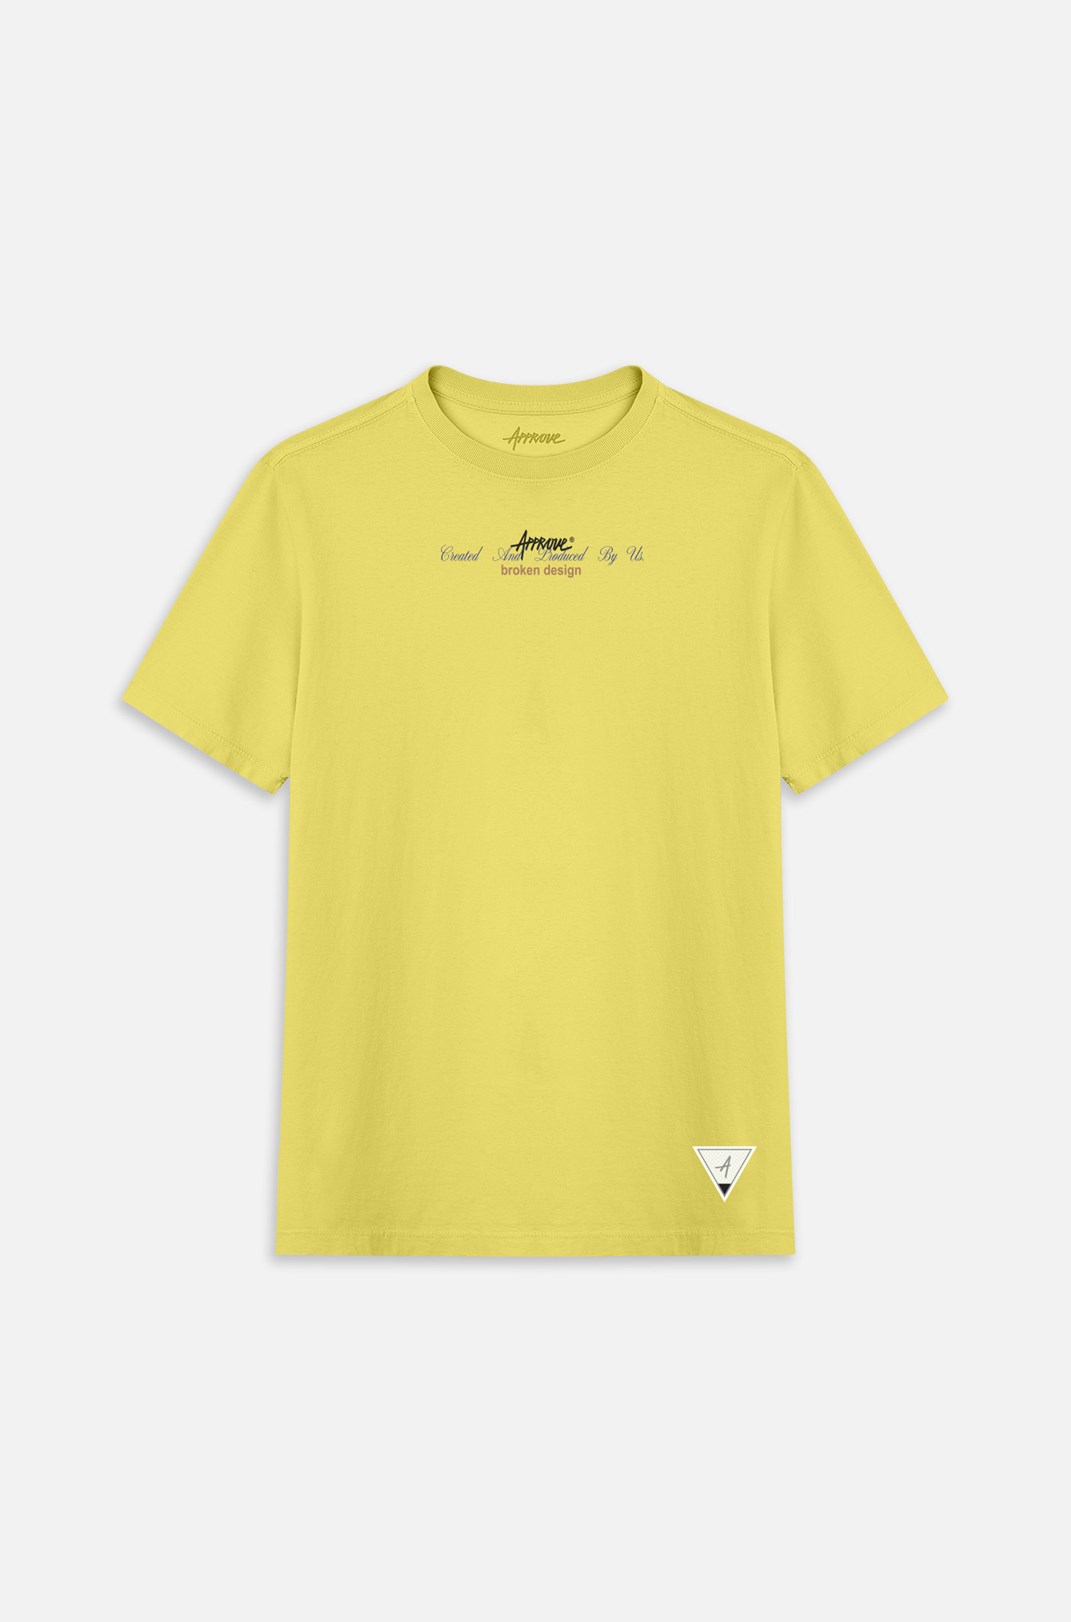 Camiseta Bold Approve Broken Design Amarela